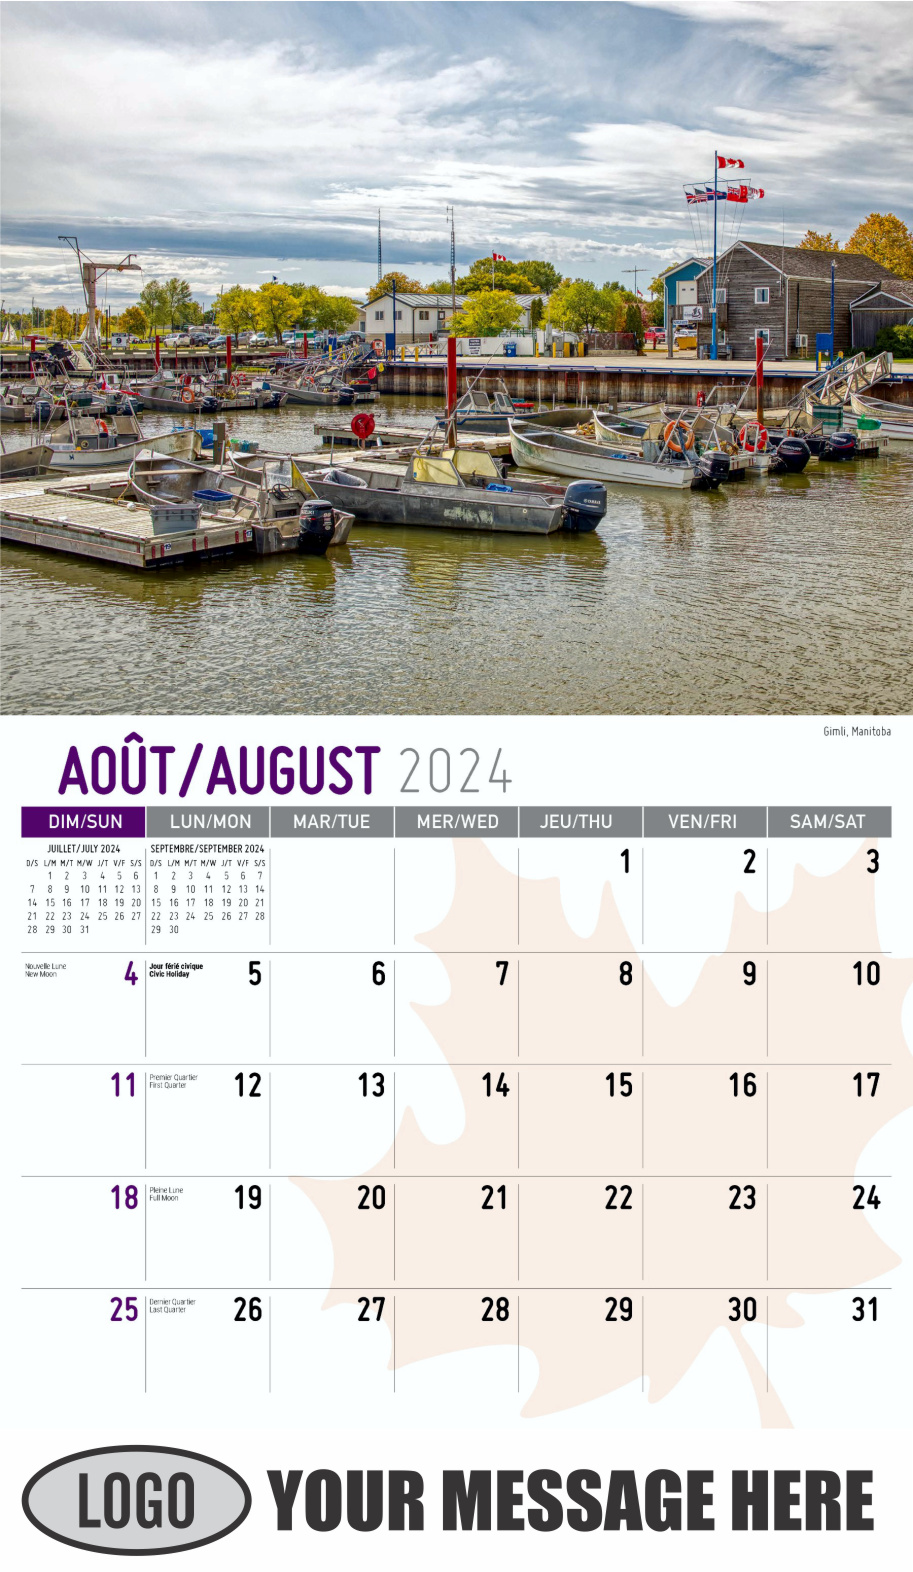 Scenes of Canada 2024 Bilingual Business Advertising Calendar - August